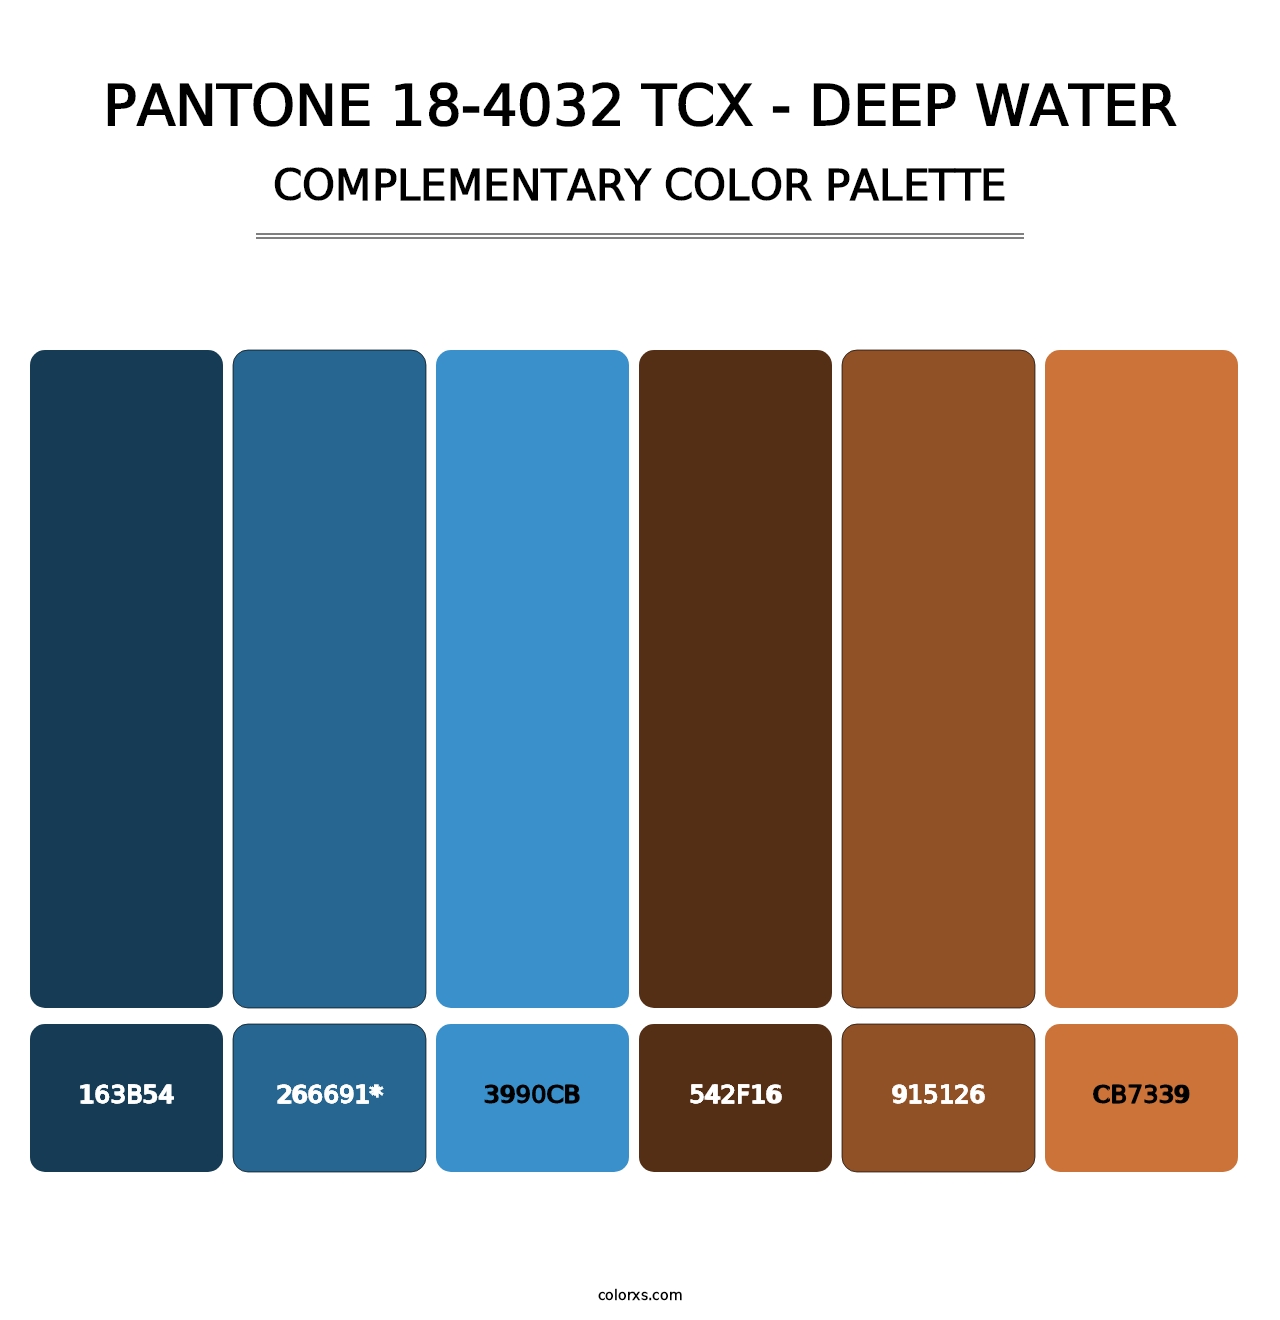 PANTONE 18-4032 TCX - Deep Water - Complementary Color Palette